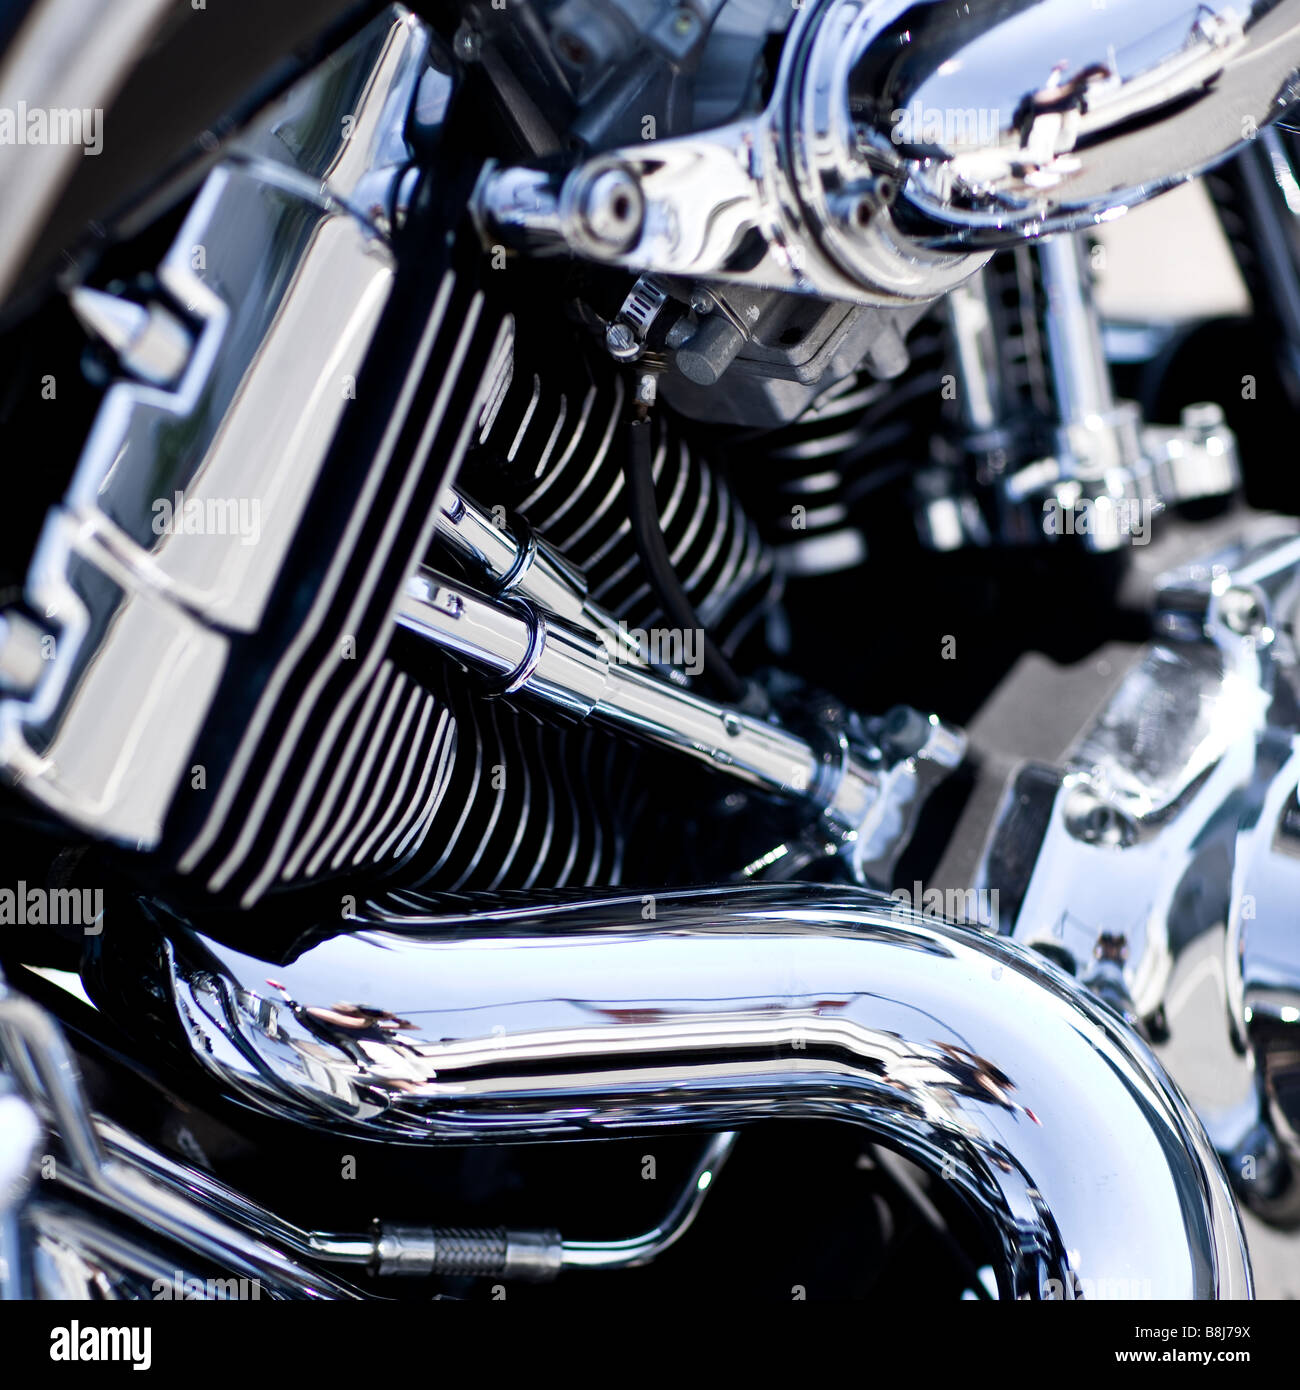 Je moteur de moto Harley Davidson. Banque D'Images